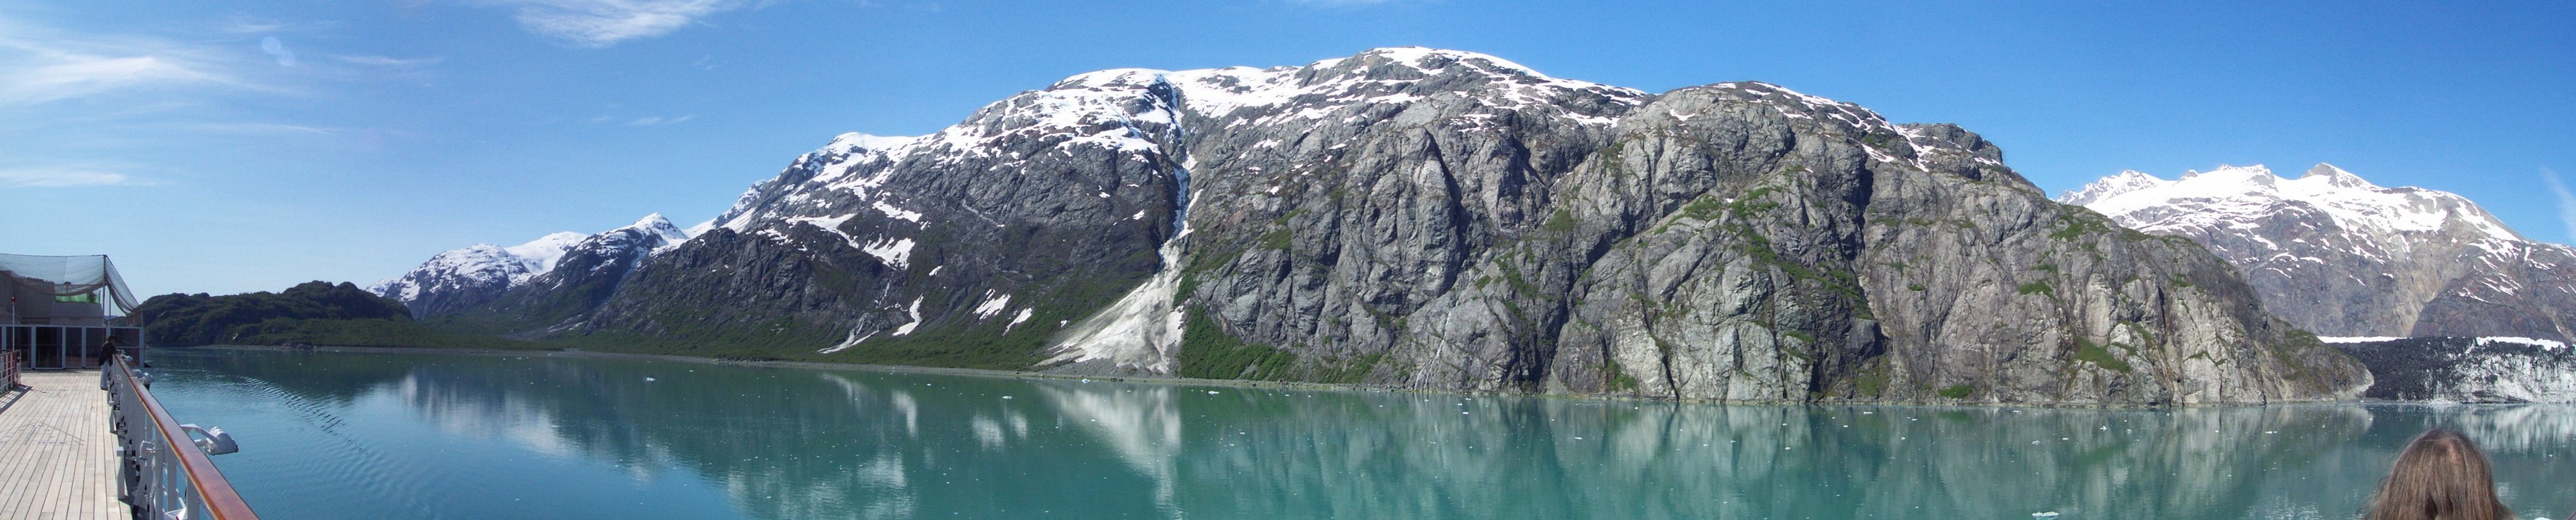 pano8_glacier_bay_panoramic_180.jpg